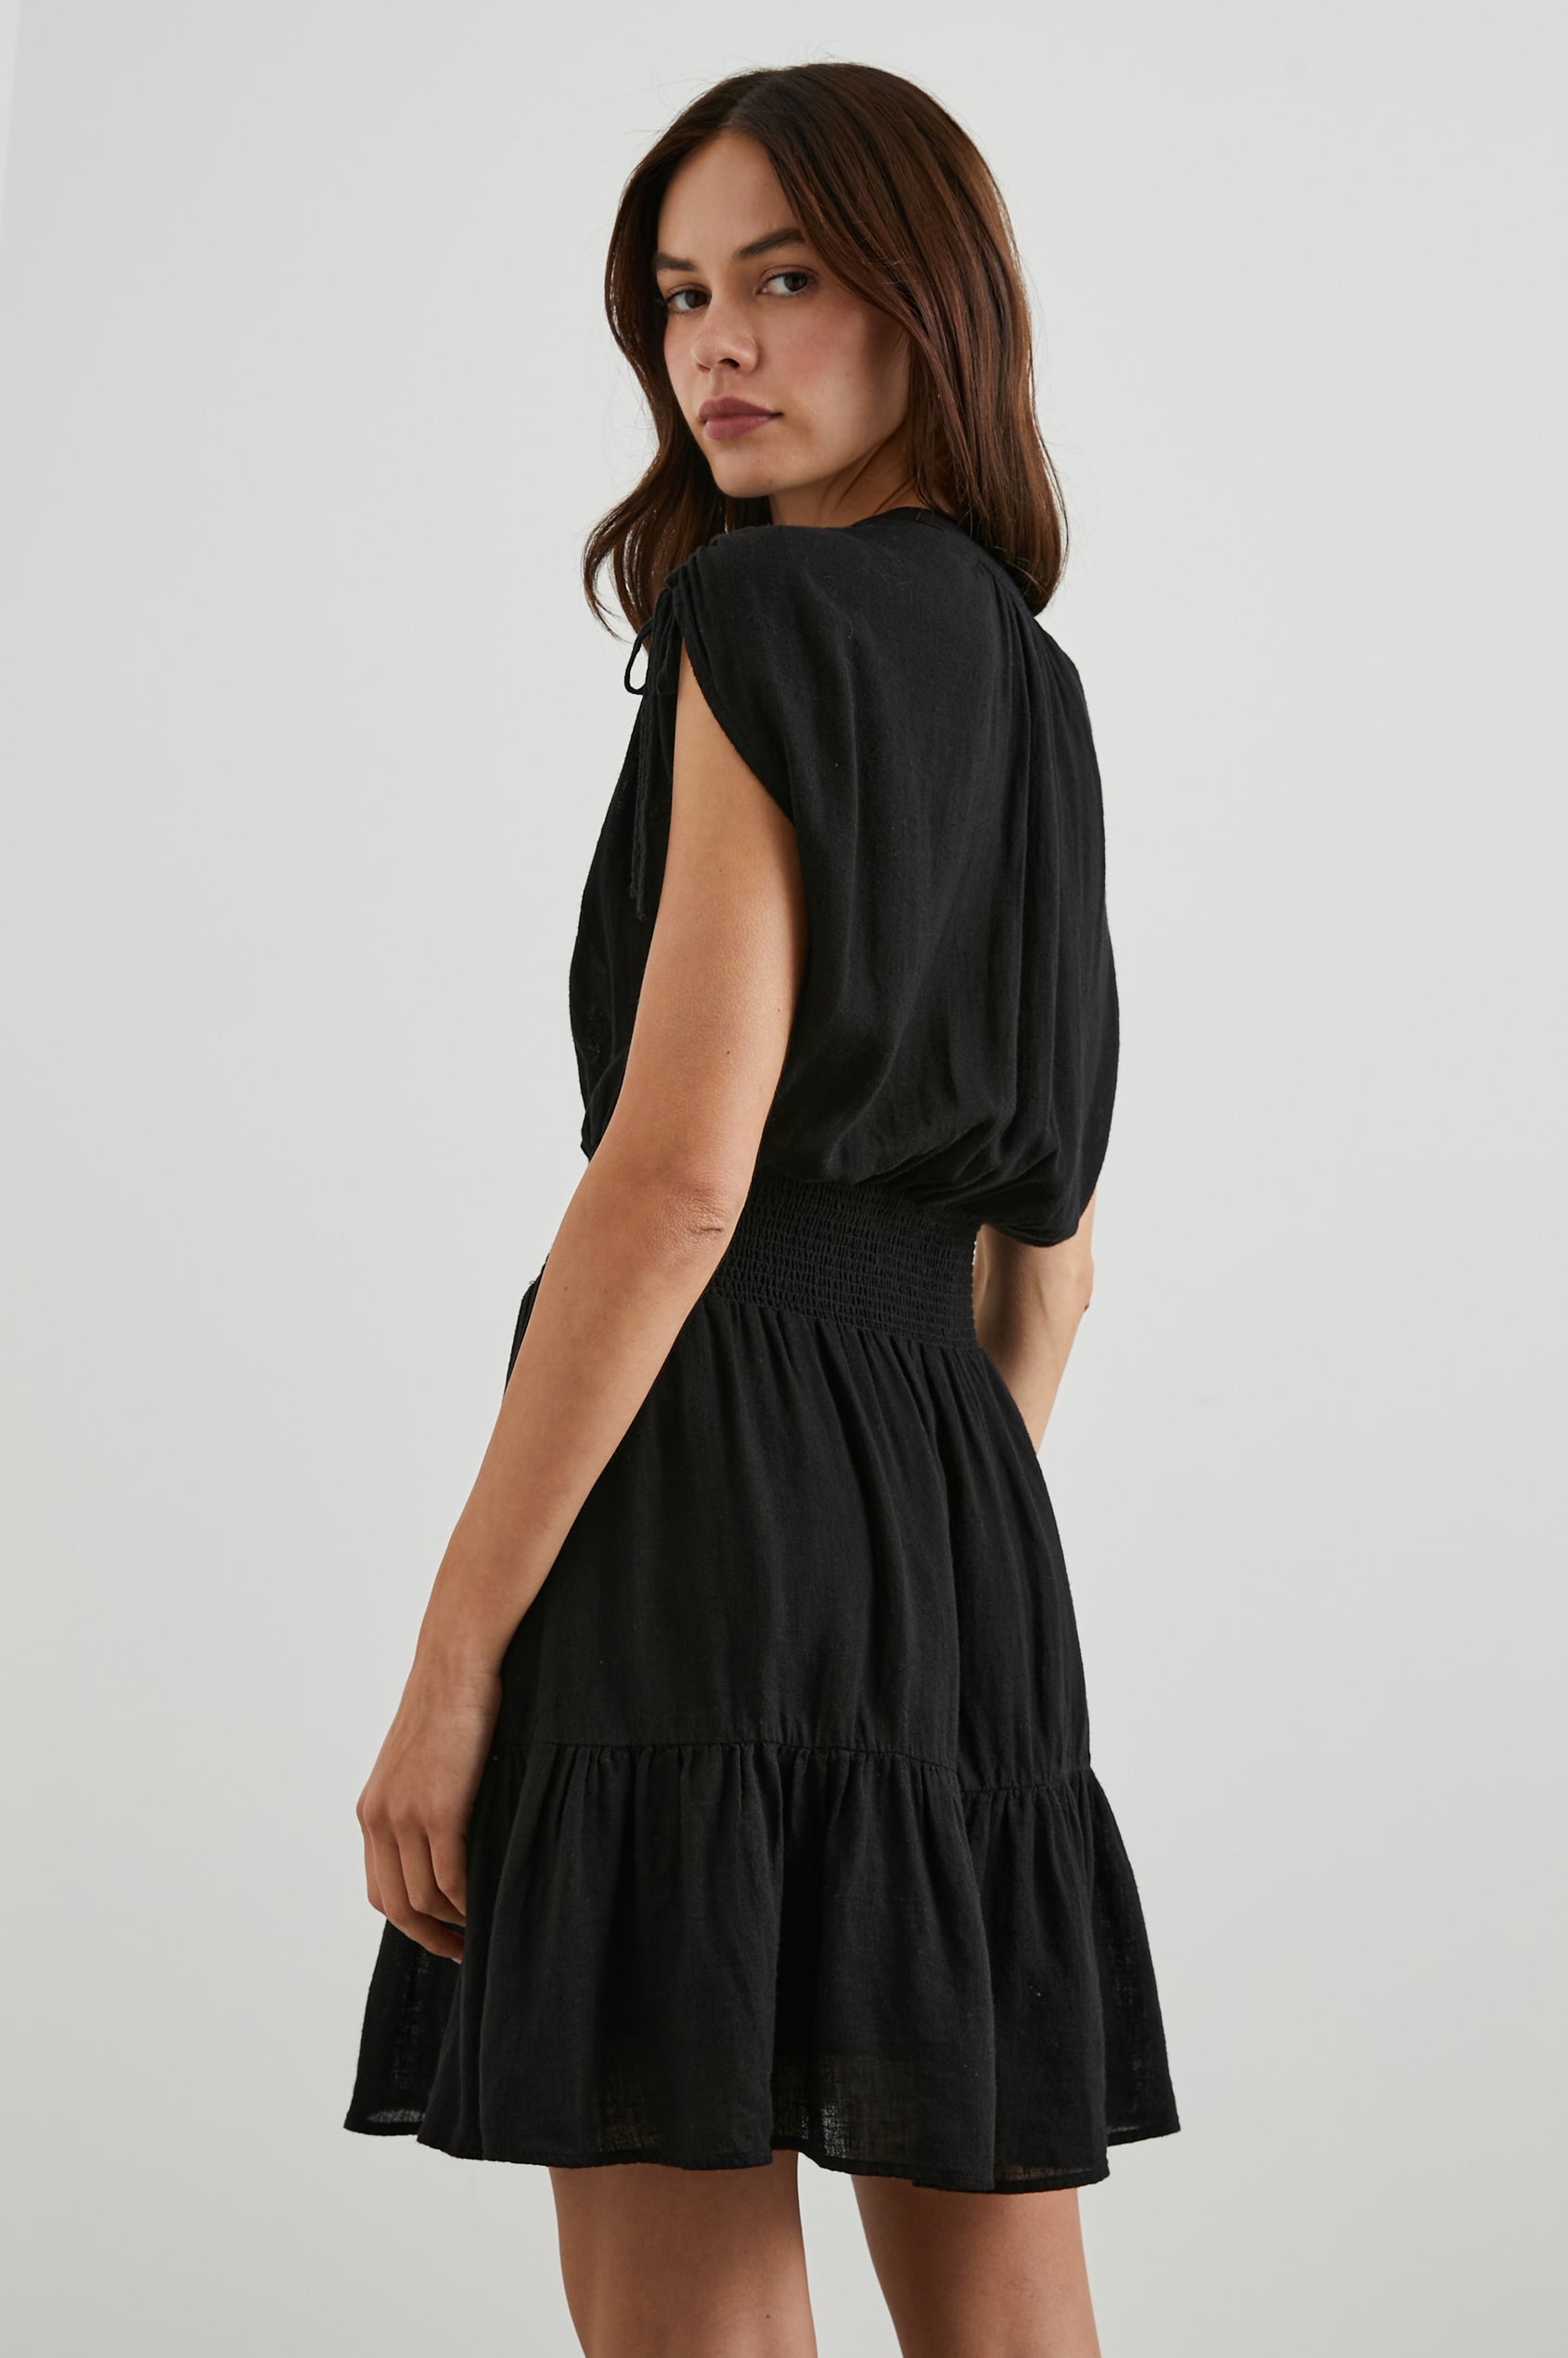 Romance Ruffle Dress ~ Black Luxe Satin